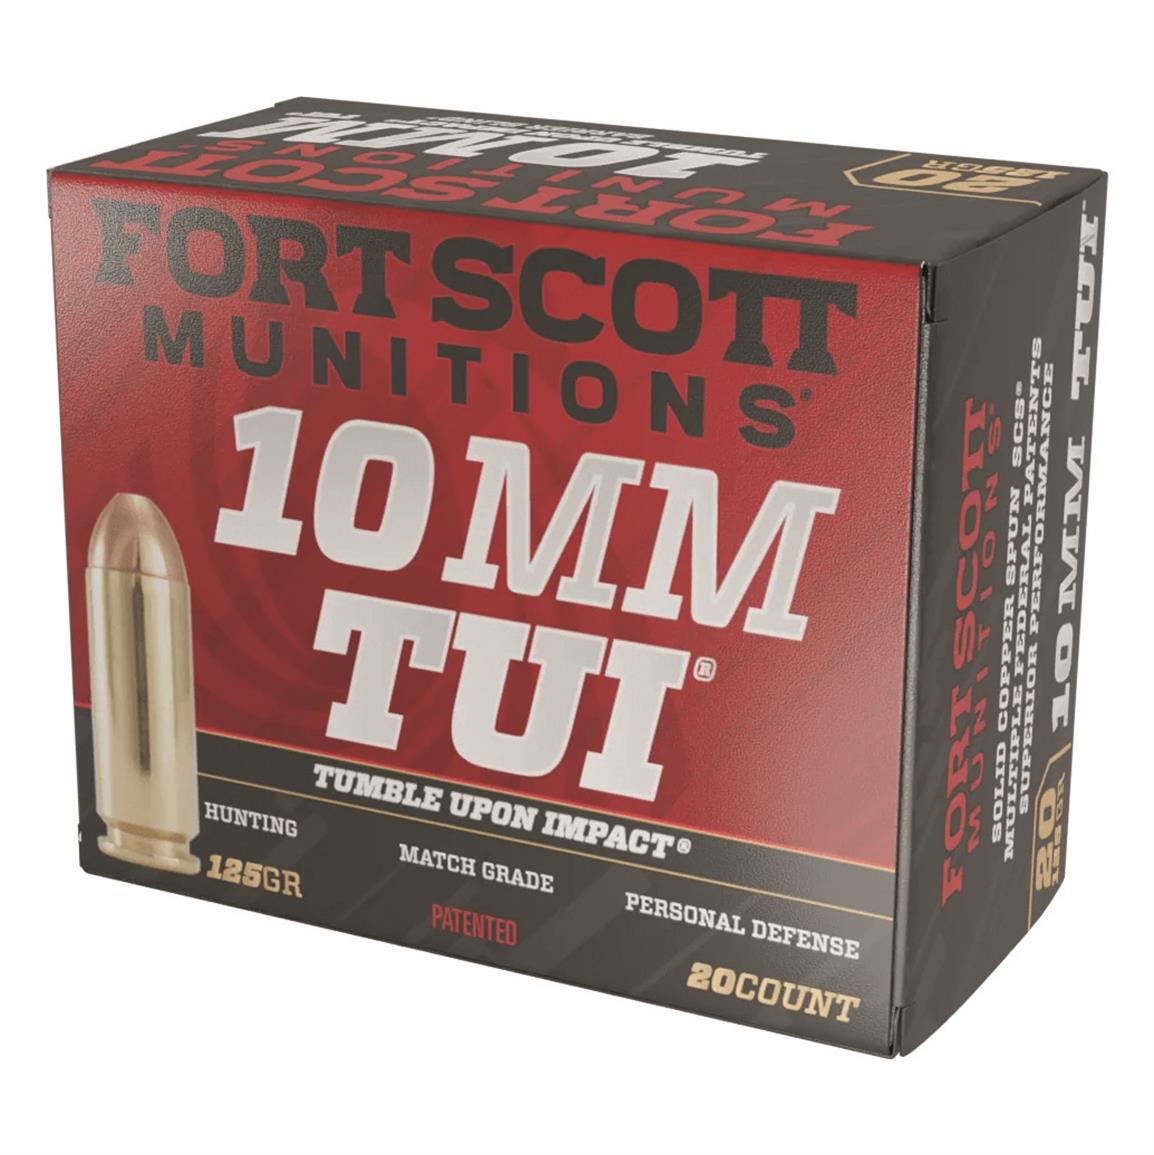 Fort Scott Tumble Upon Impact Ammo, 10mm, SCS, 125 Grain, 20 Rounds